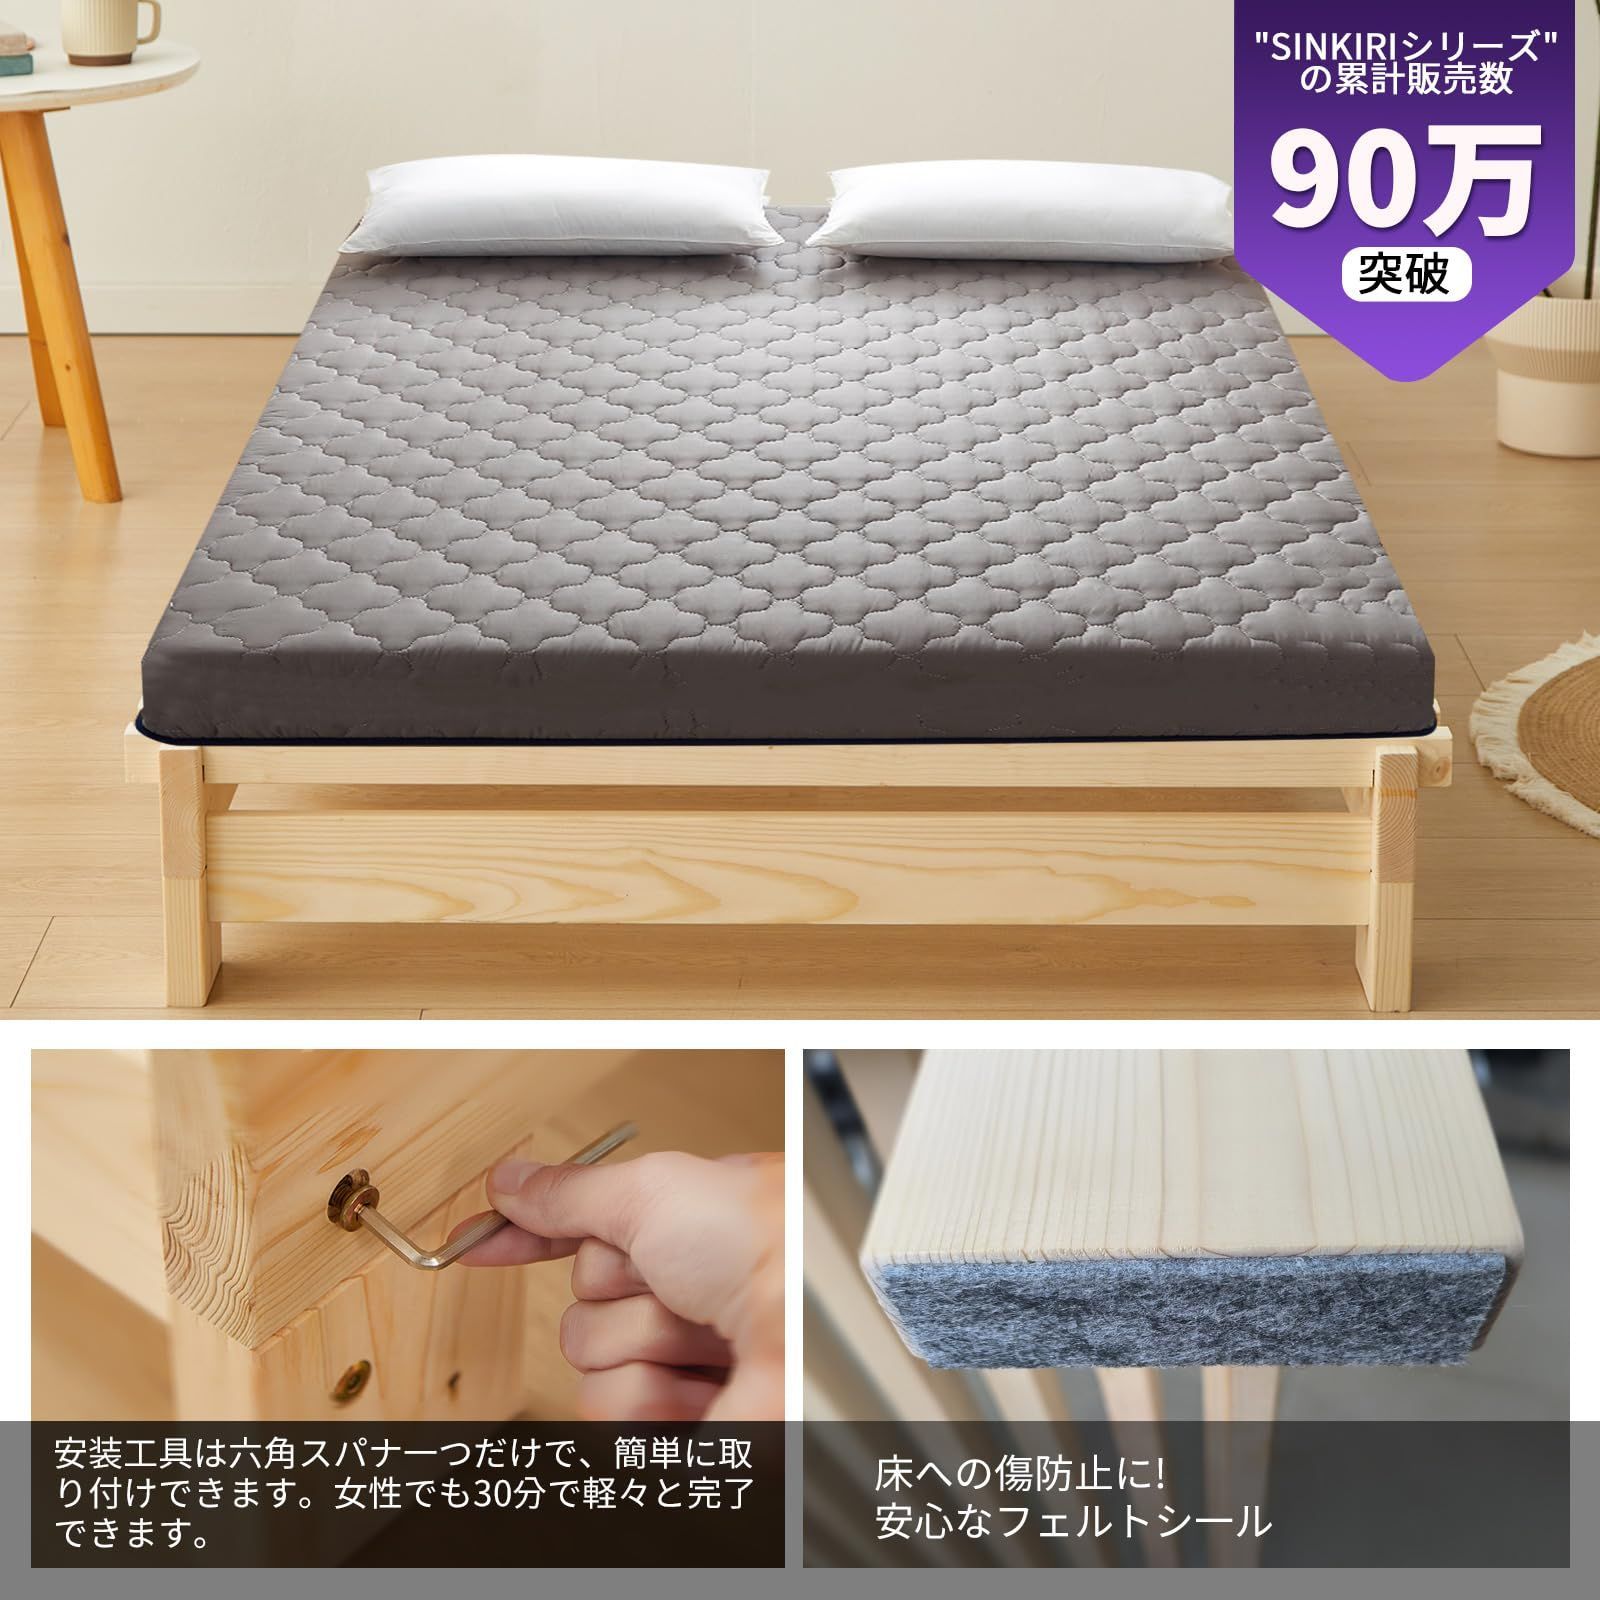 SINKIRI ベッドフレーム すのこベッド セミダブル 日本特許デザイン スノコベッド ローベッドフレーム 組み立て式ベッド 木製  耐荷重約300kg 国産ひのきと国産杉 - メルカリ